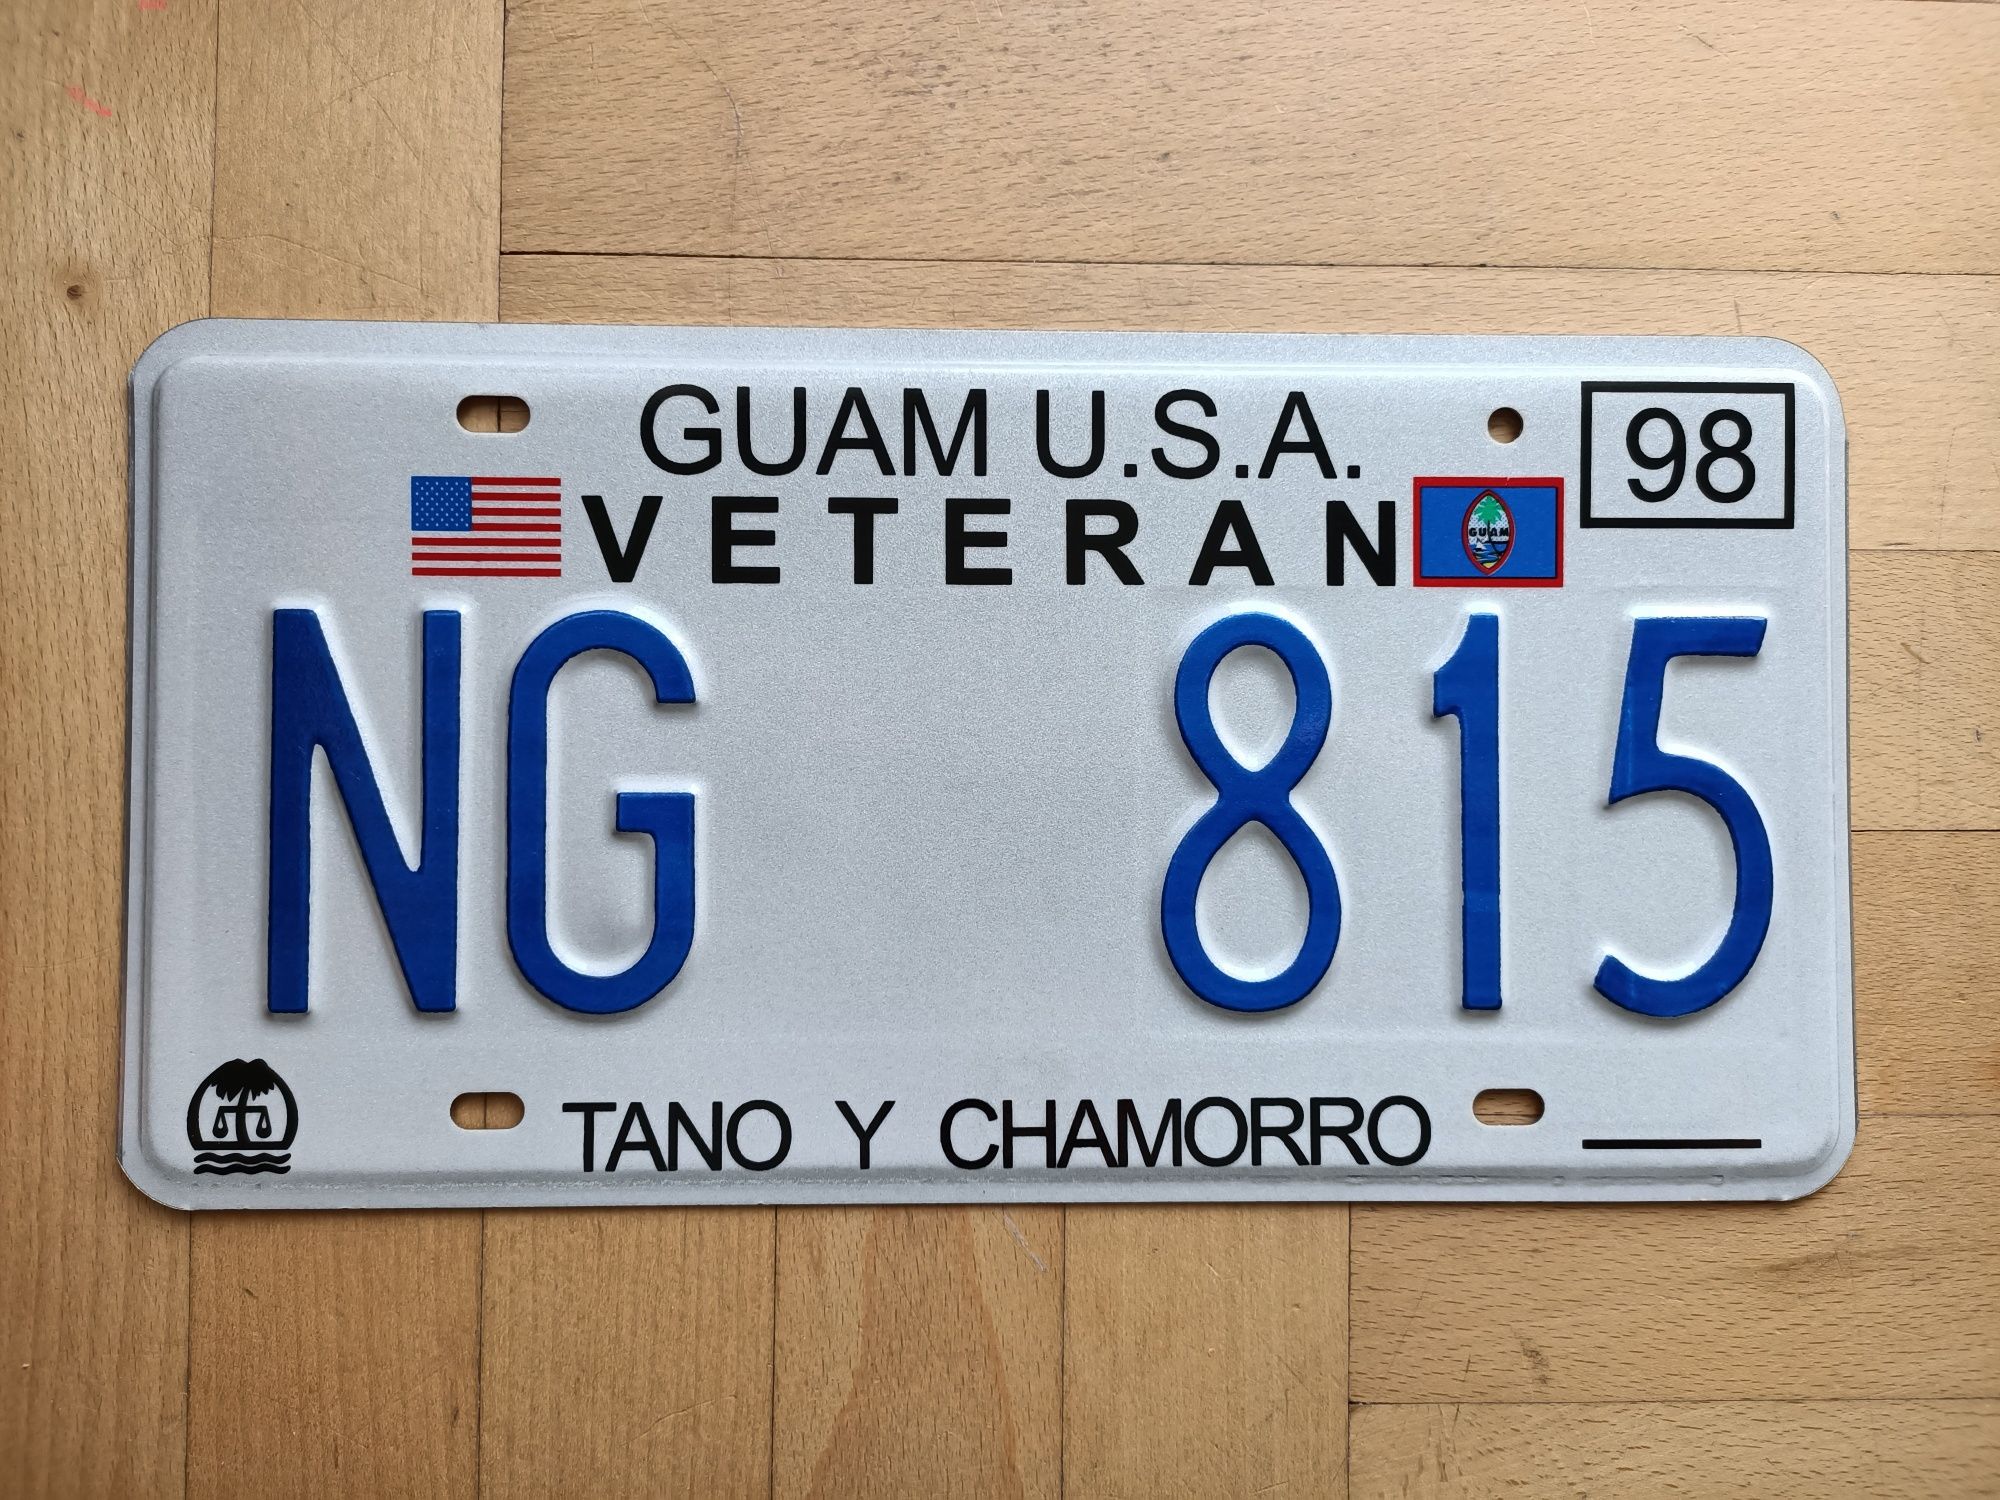 Tablica Guam USA Veteran 1998